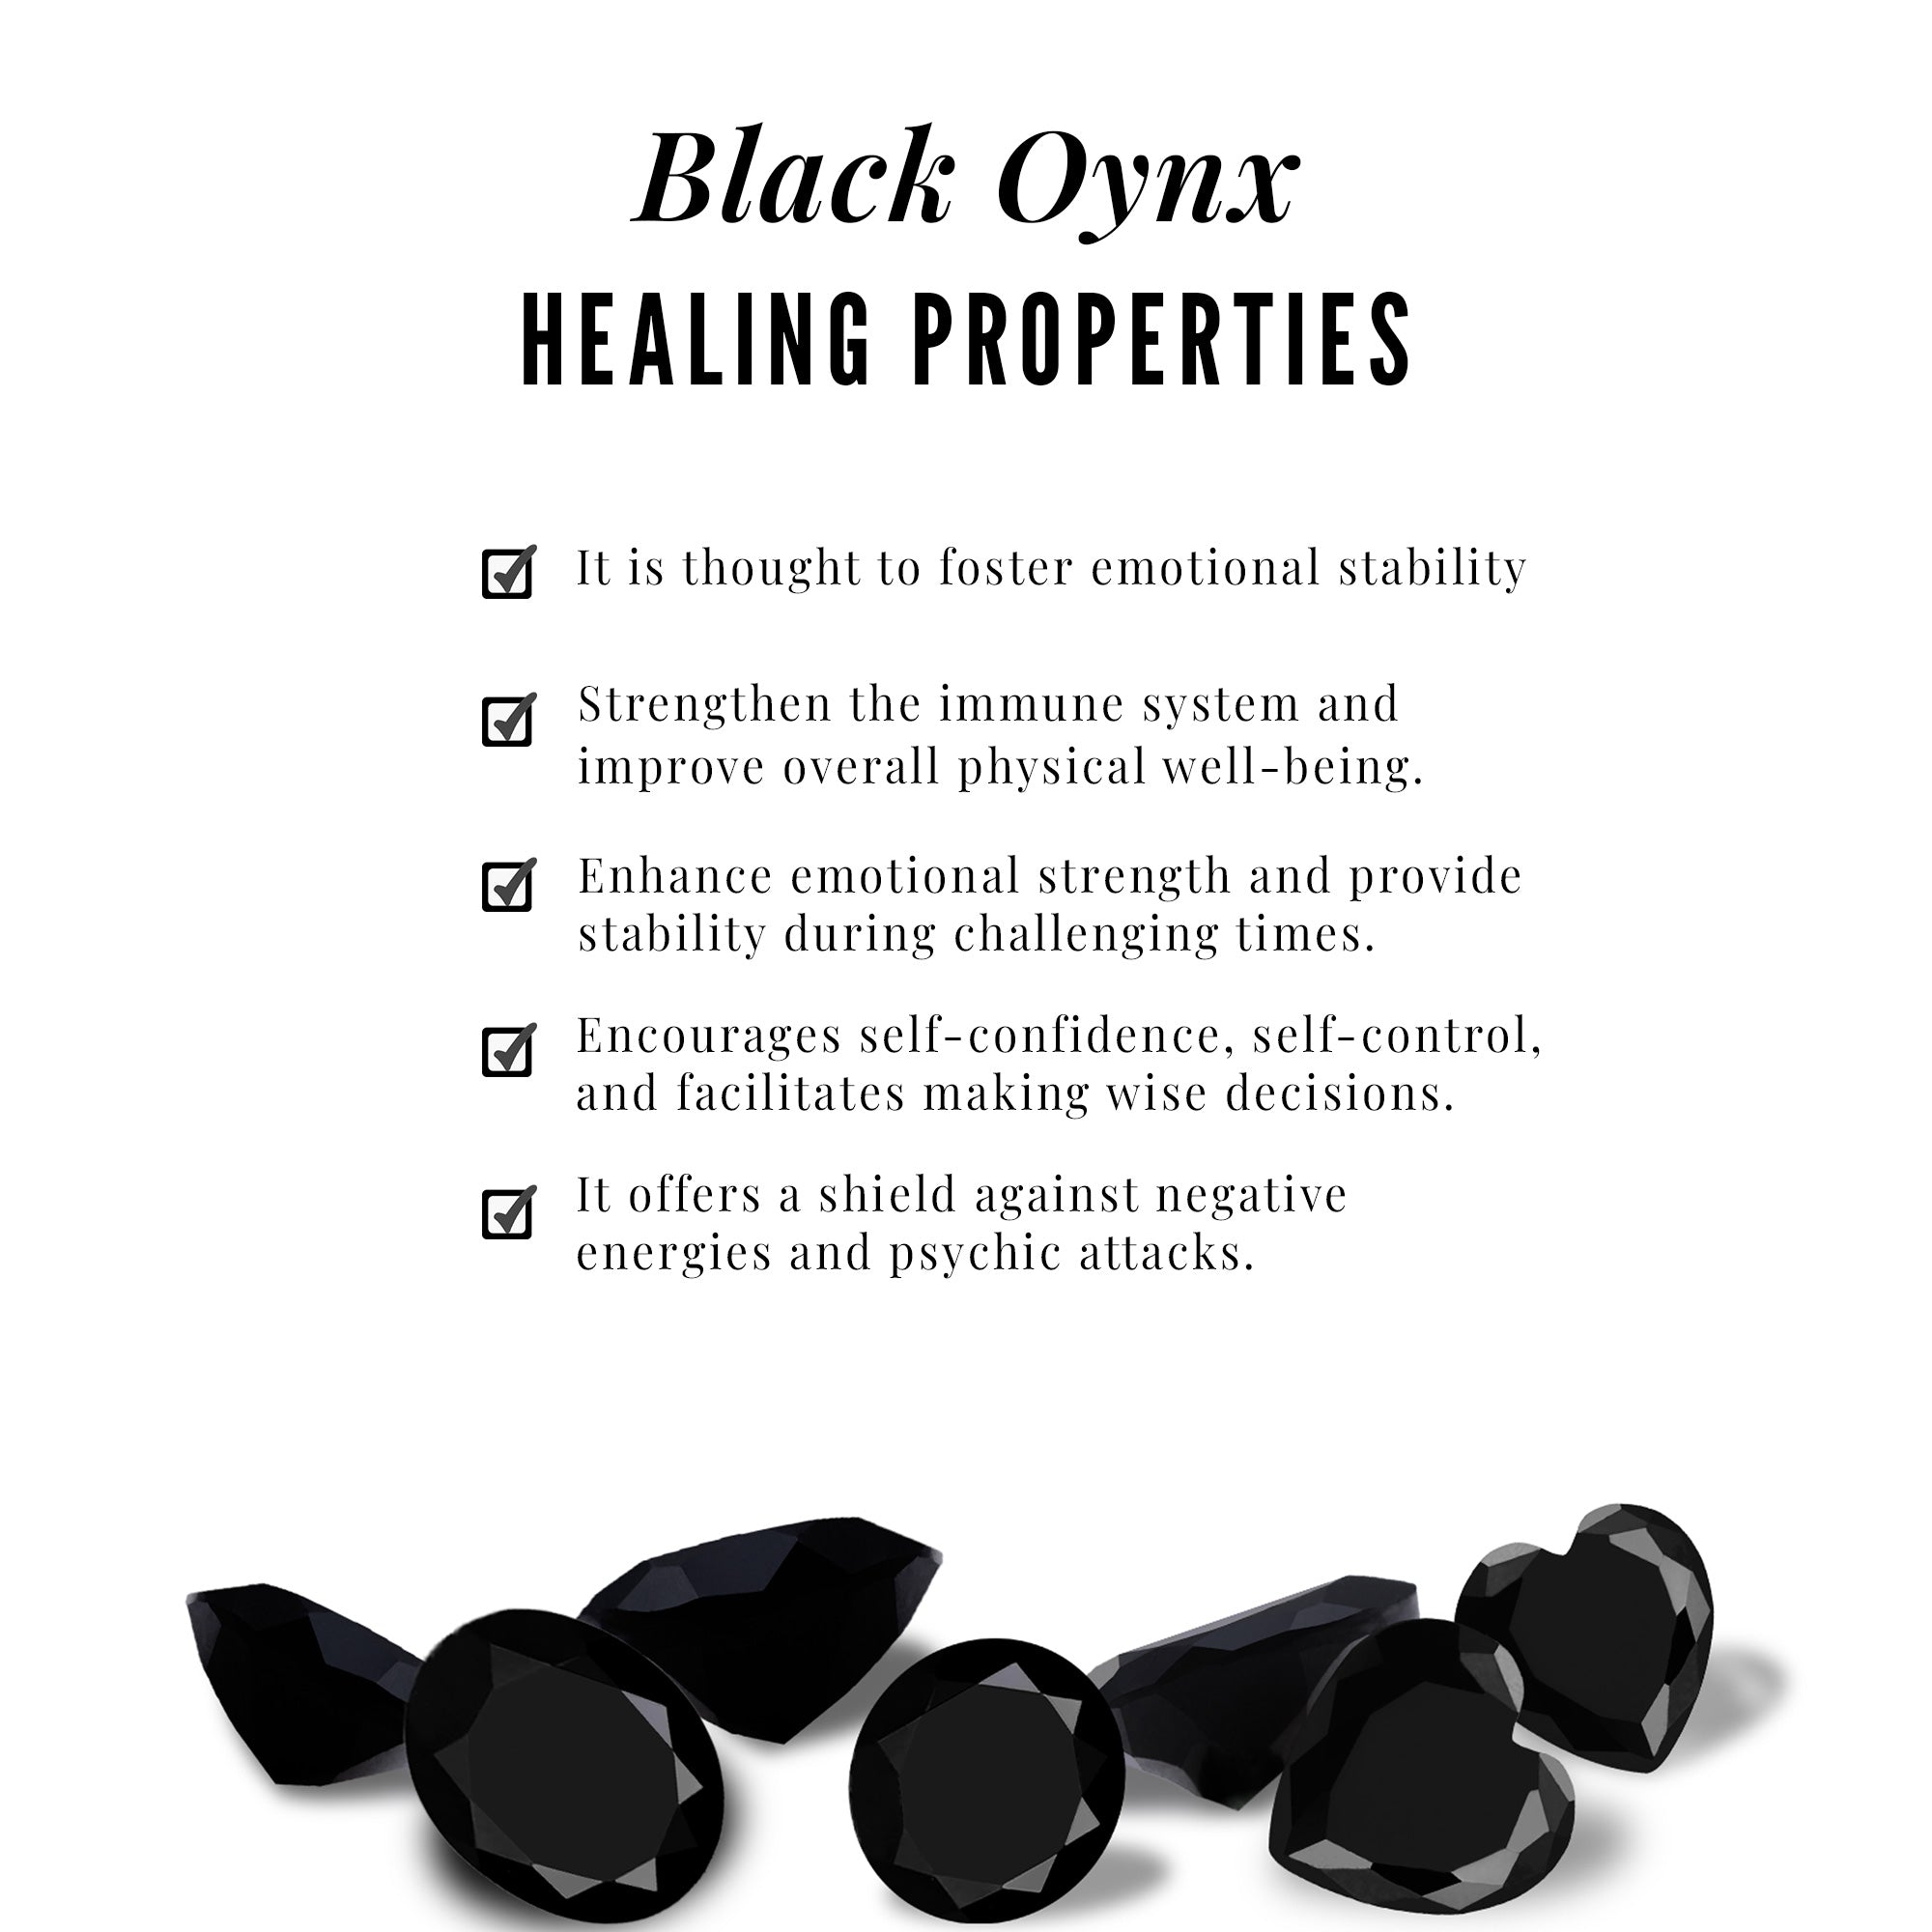 1 CT Black Onyx and Diamond East West Half Eternity Ring Black Onyx - ( AAA ) - Quality - Rosec Jewels